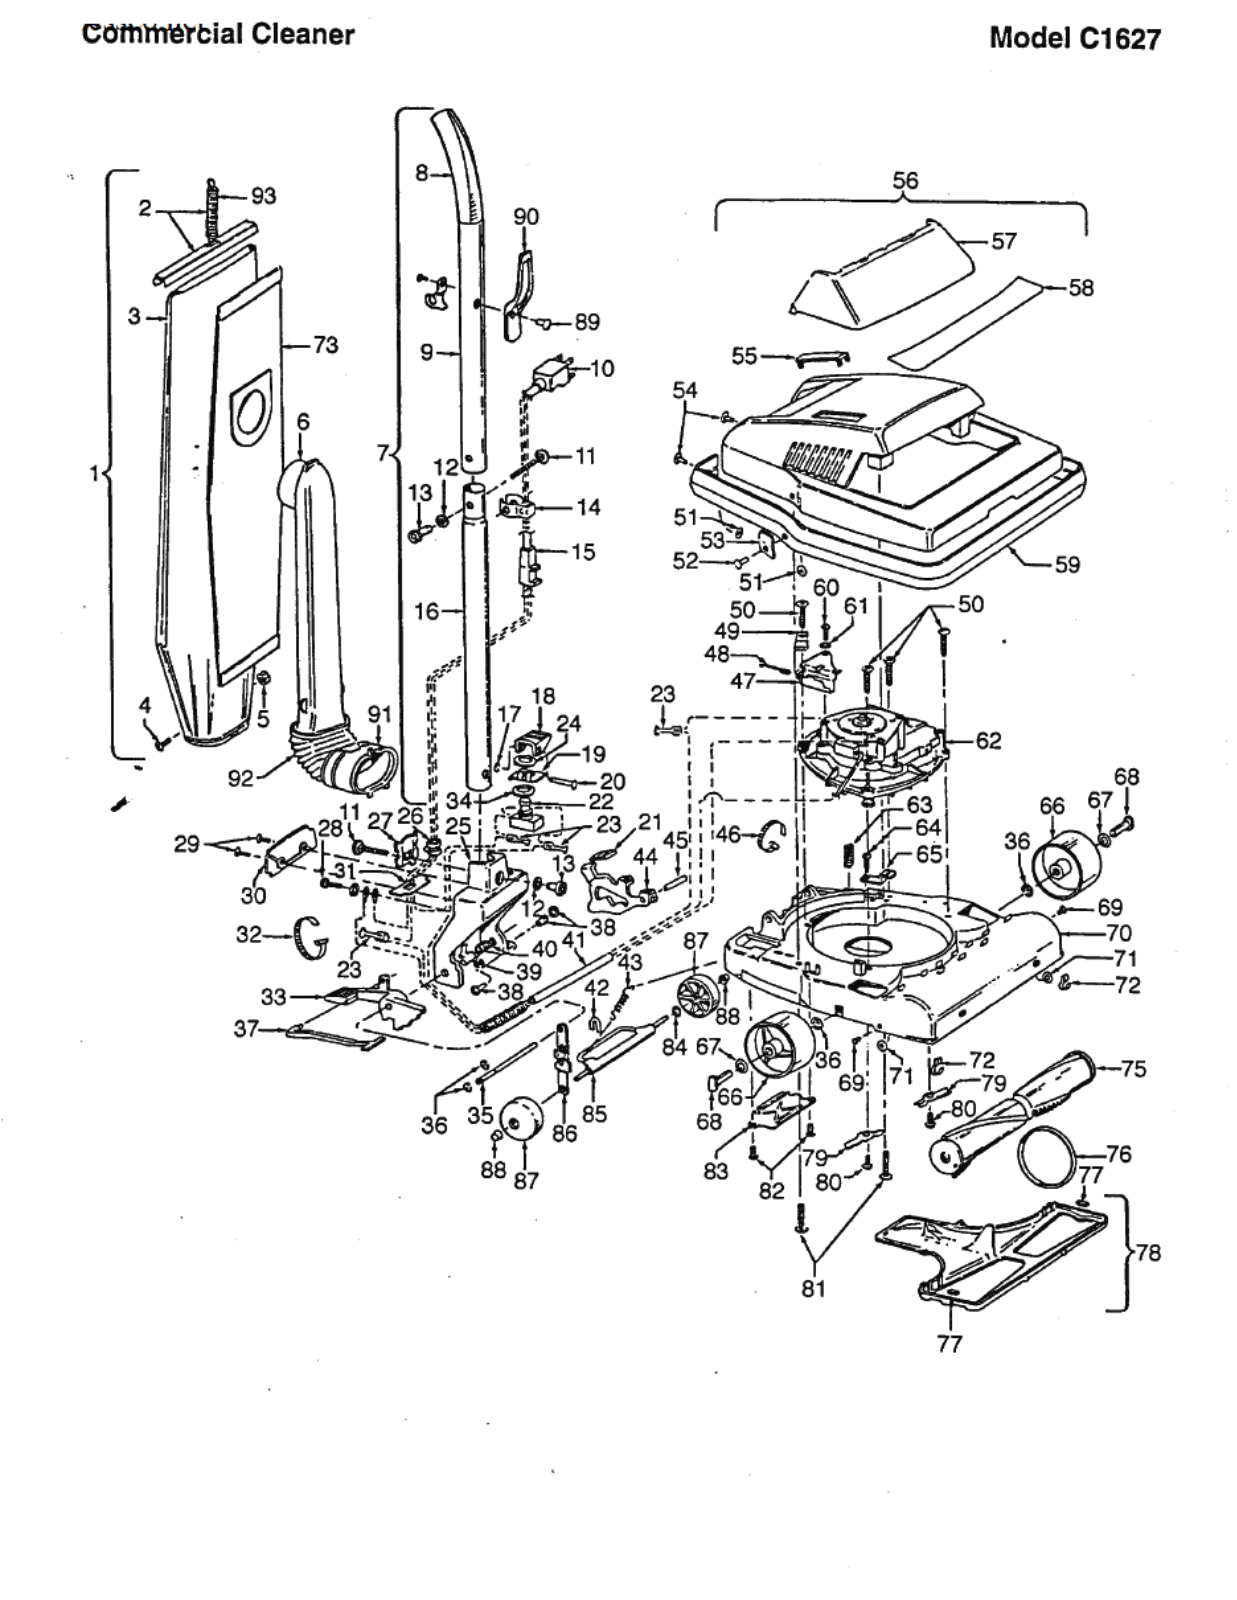 Hoover C1627 Owner's Manual